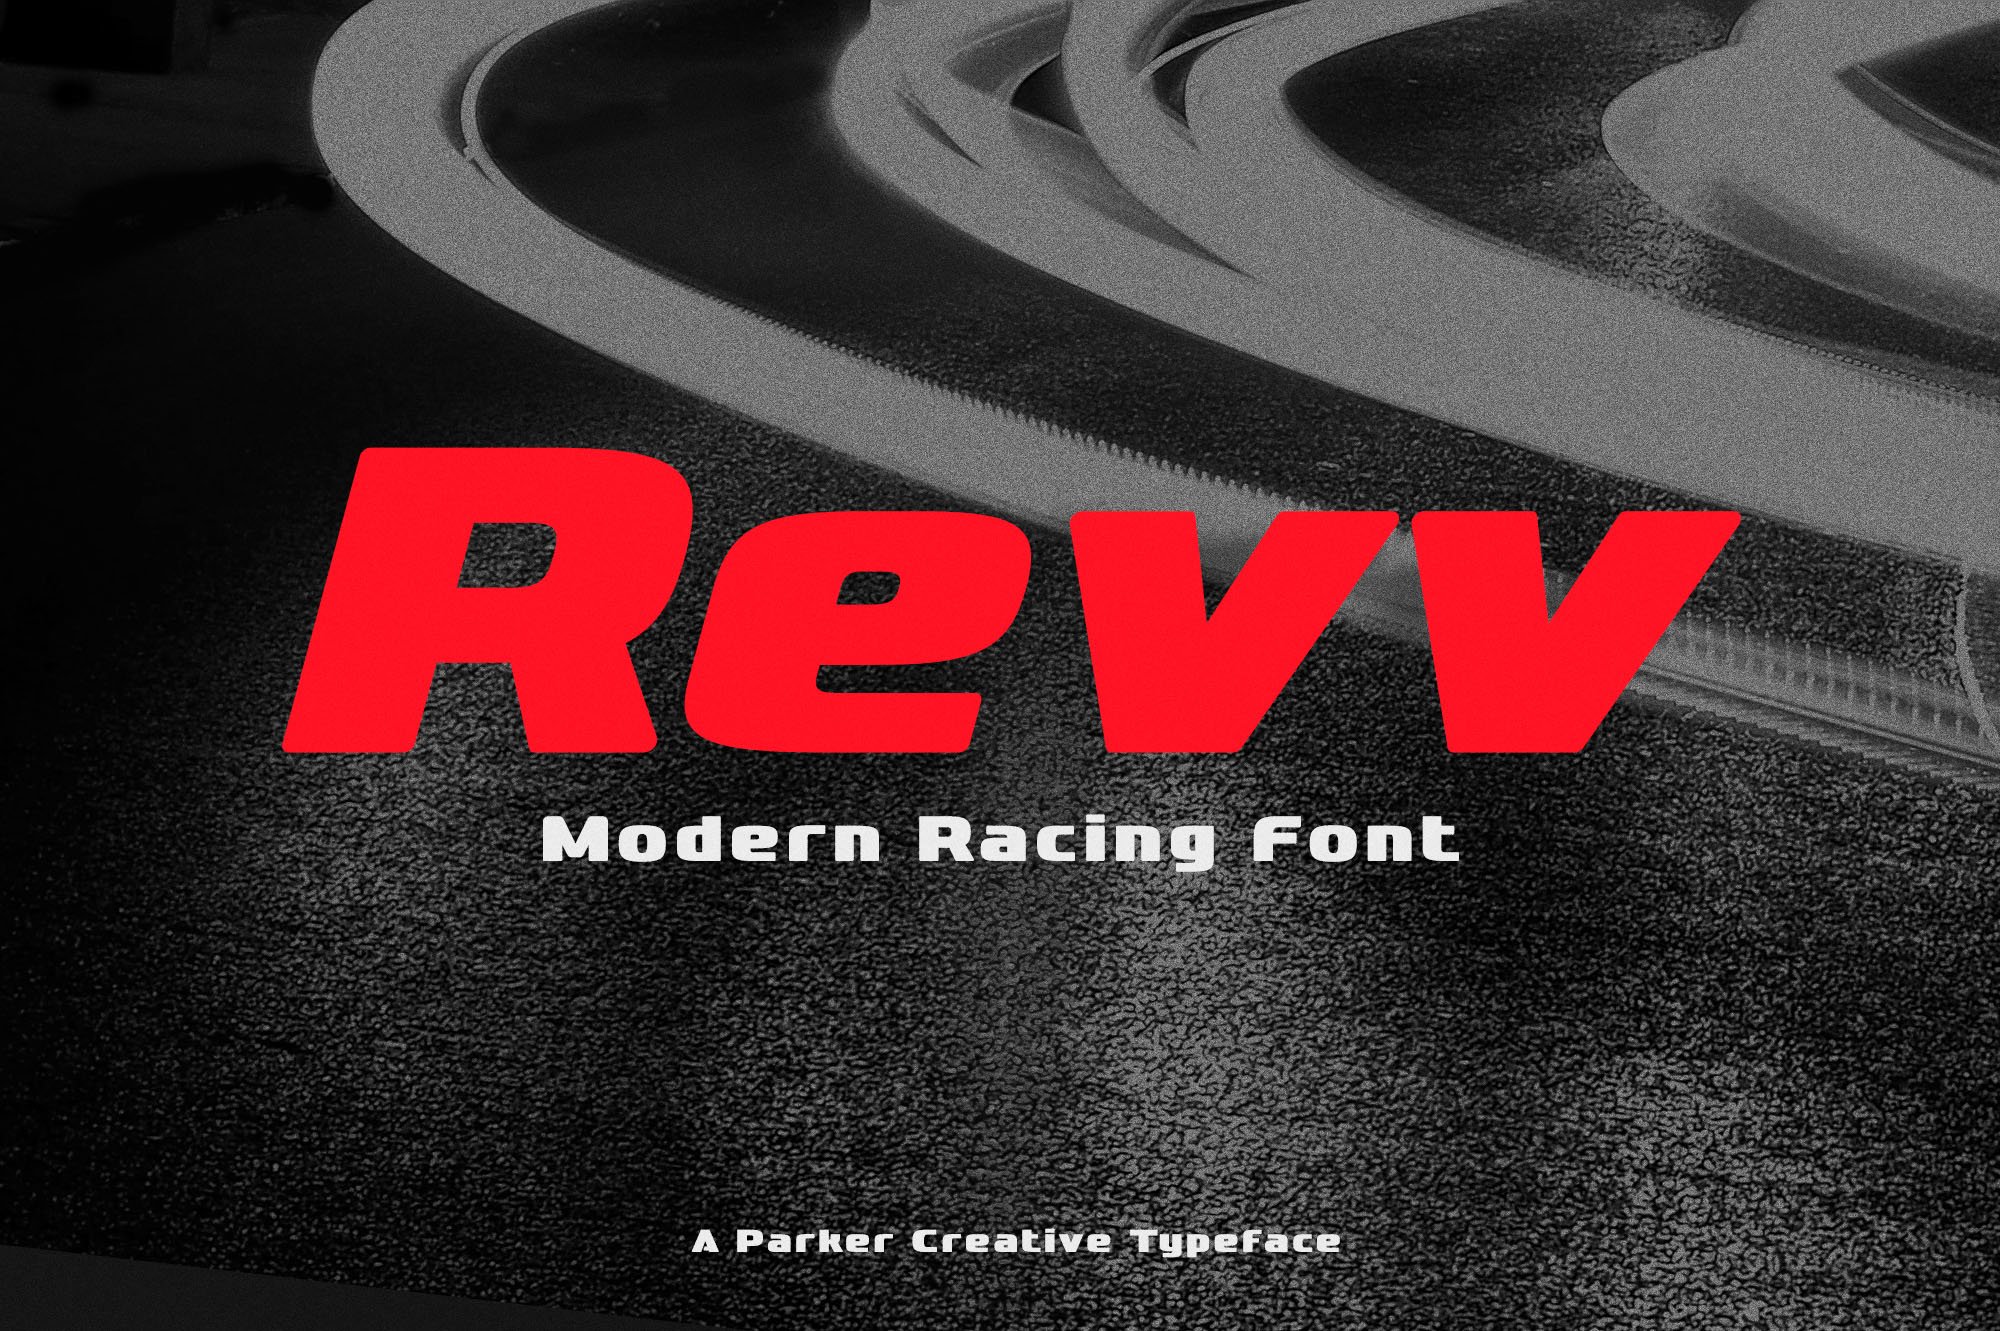 Revv Modern Racing Font cover image.